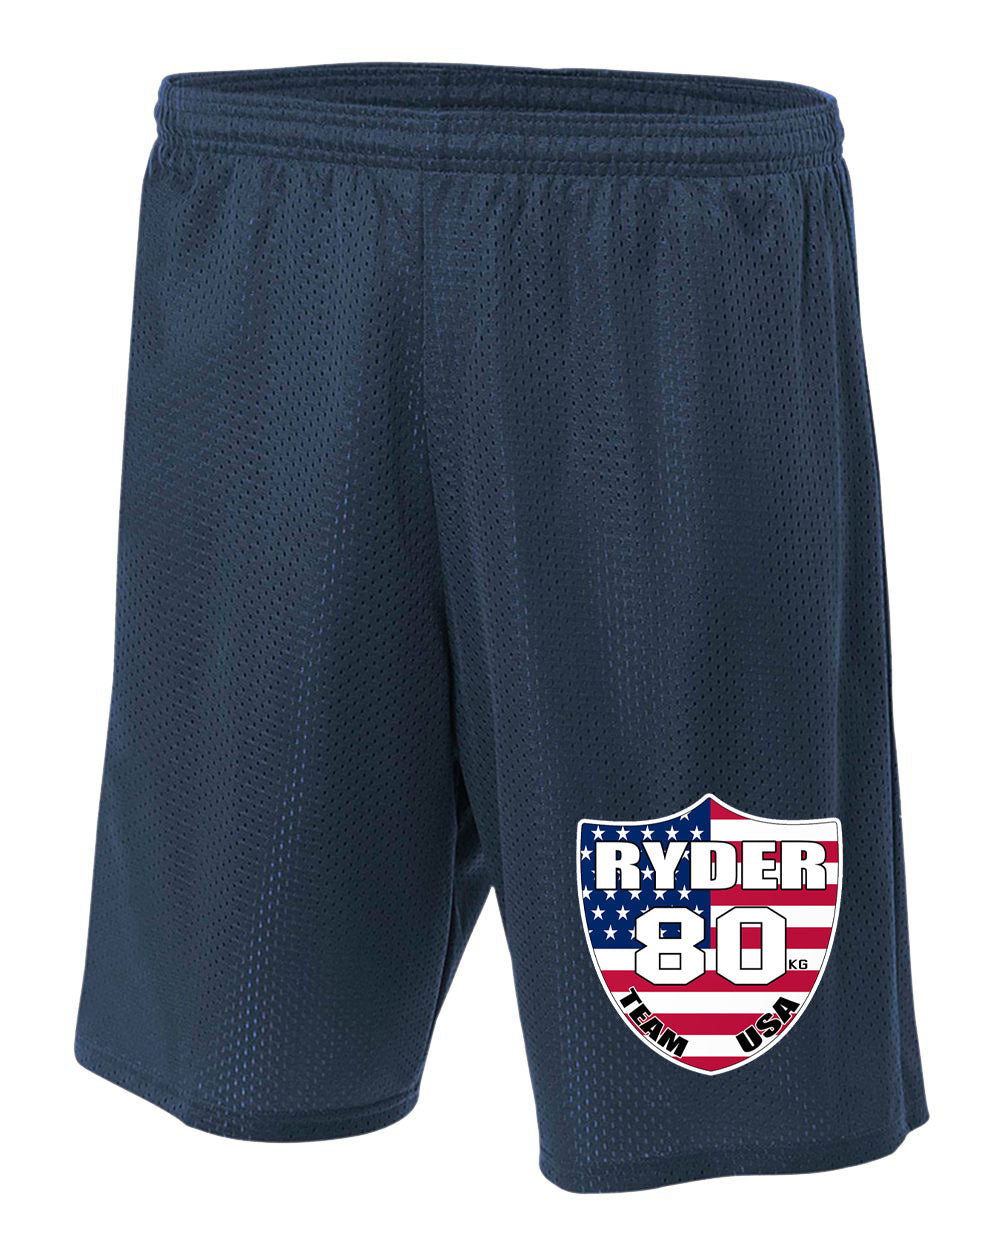 Ryder Wrestling Team USA Mesh Shorts